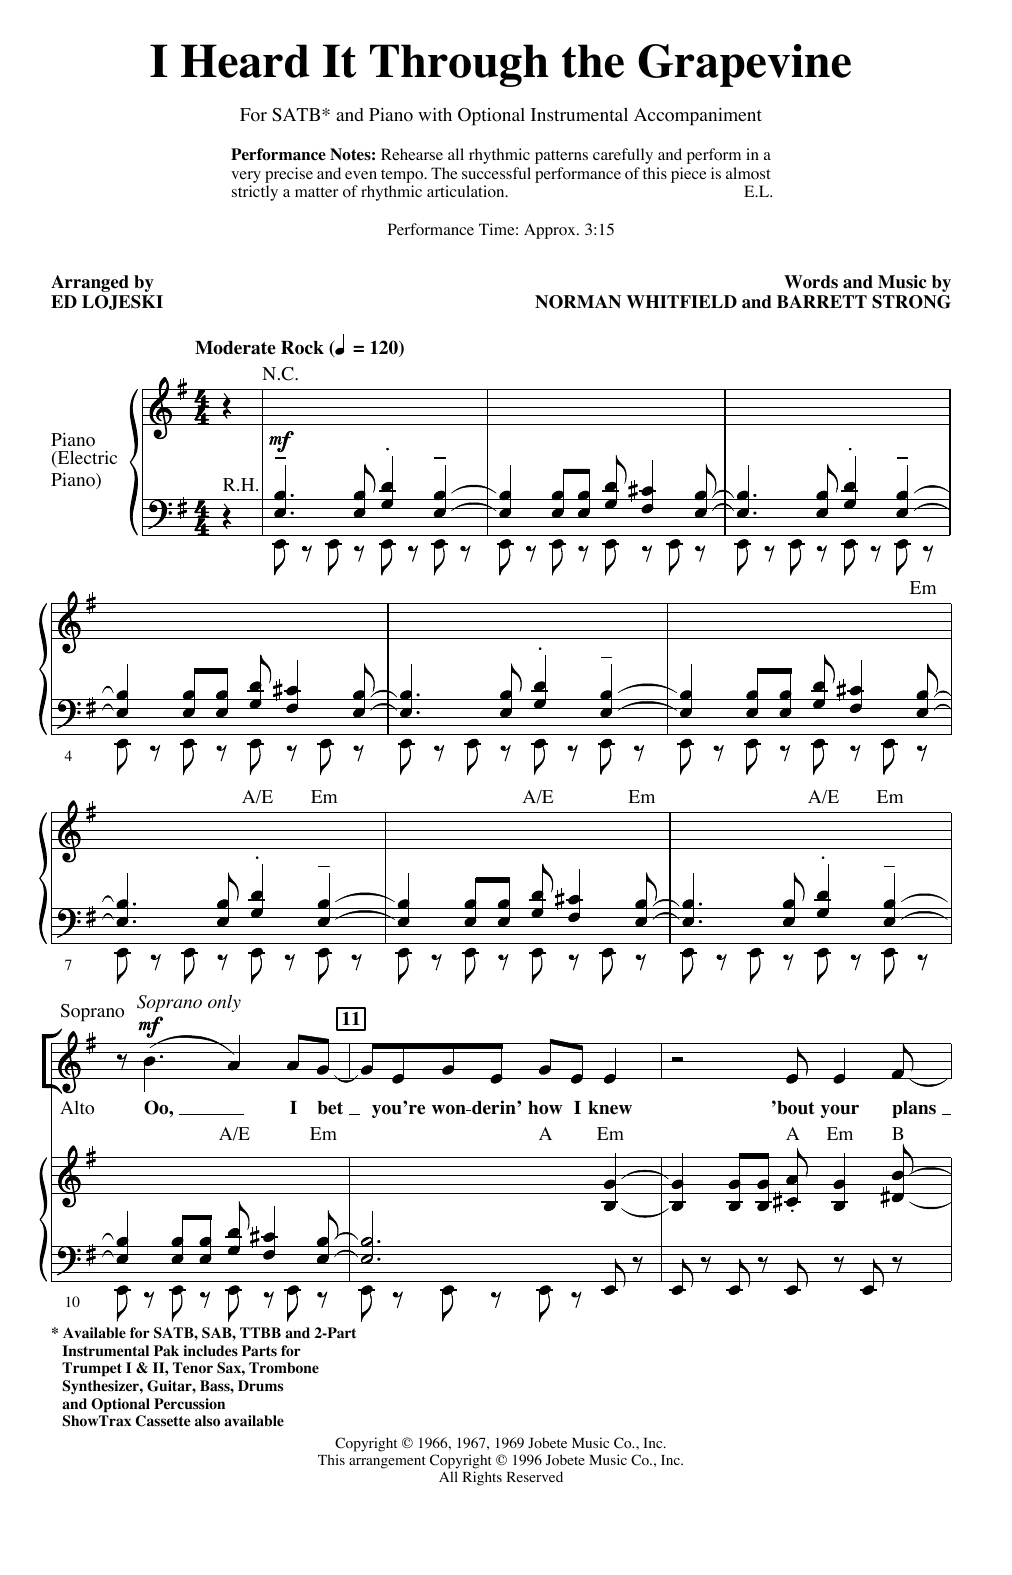 Marvin Gaye I Heard It Through The Grapevine (arr. Ed Lojeski) Sheet Music Notes & Chords for SAB Choir - Download or Print PDF